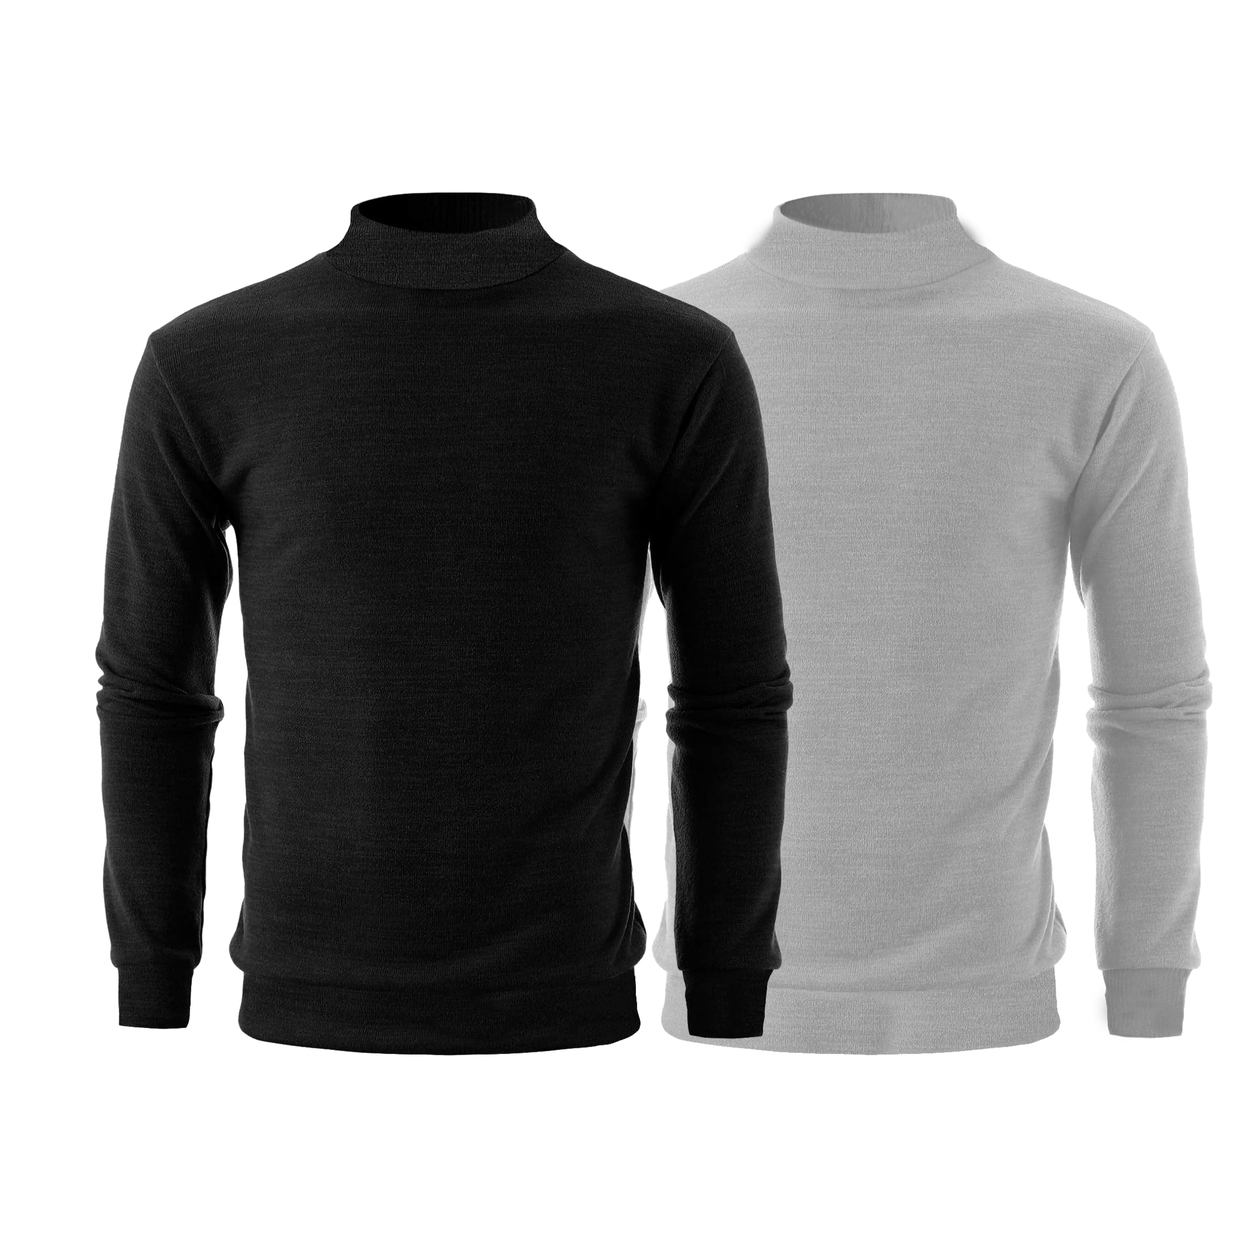 2-Pack: Men's Winter Warm Cozy Knit Slim Fit Mock Neck Sweater - White & Burgundy, Medium